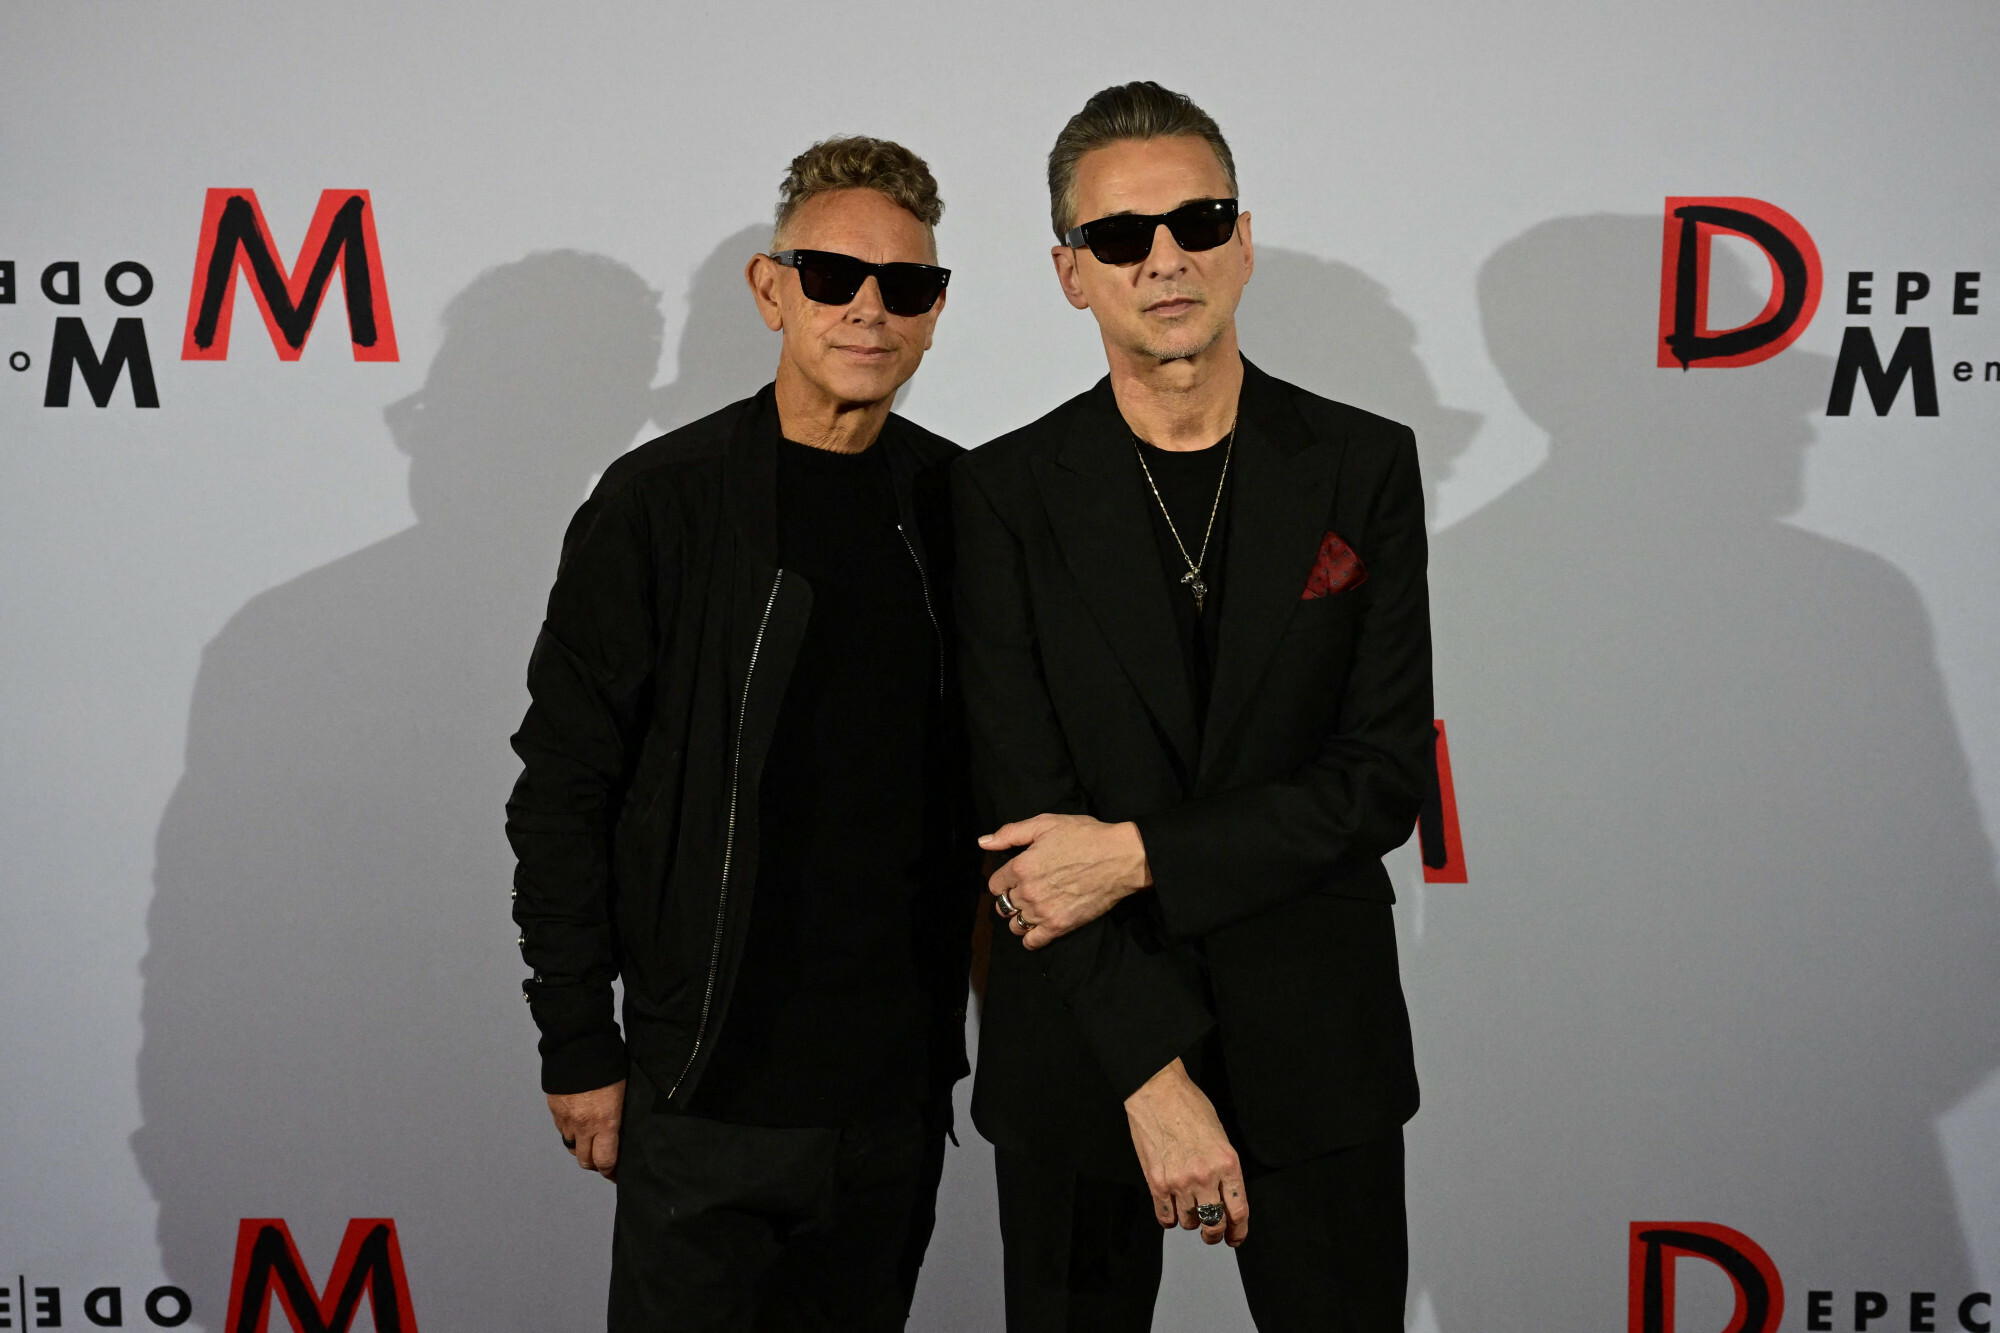 Premiera nowej piosenki Depeche Mode!